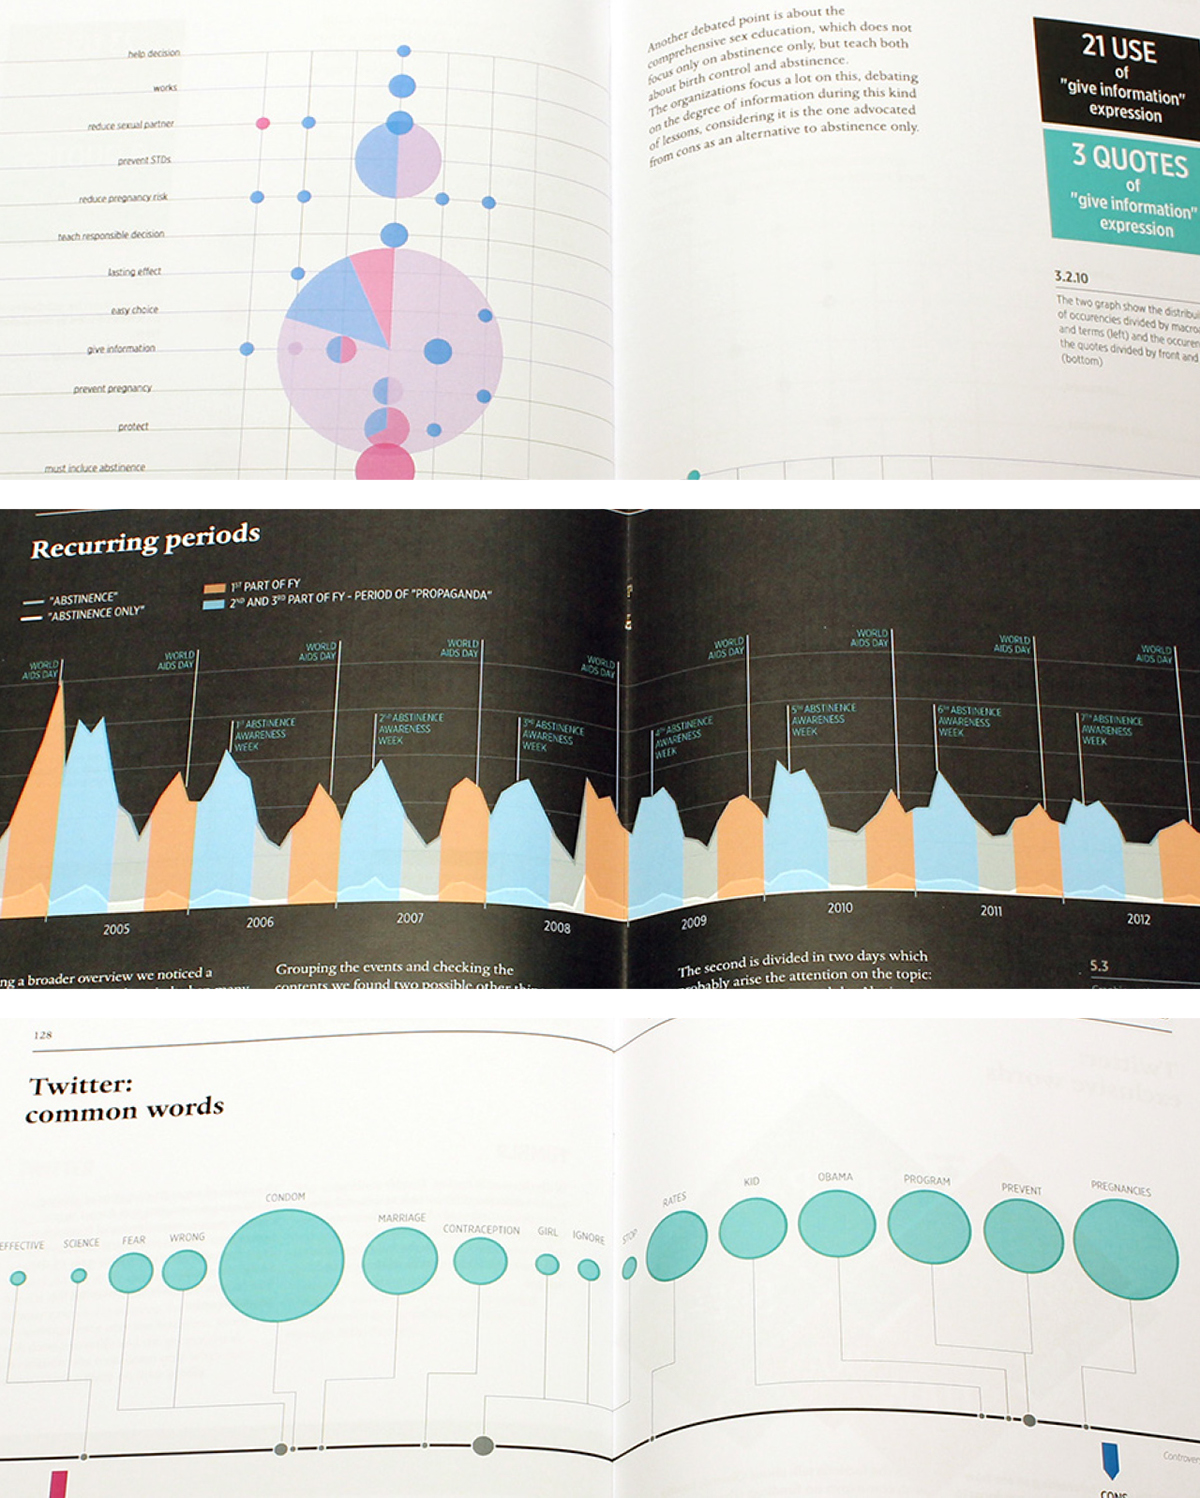 sex education abstinence only infografica infographic density design data visualization dataviz report